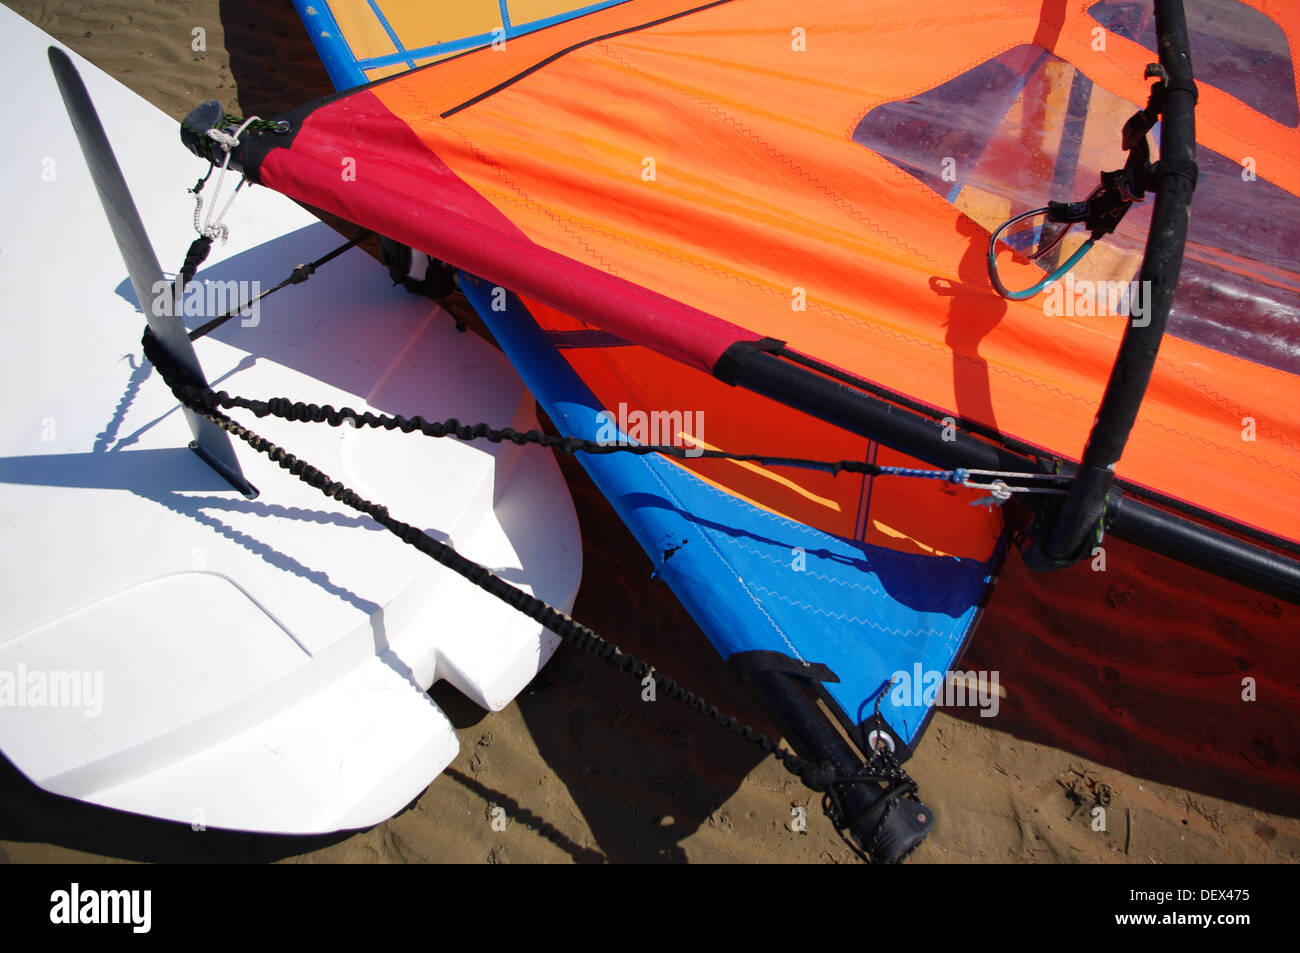 Windsurfing boards on the beach Stock Photo